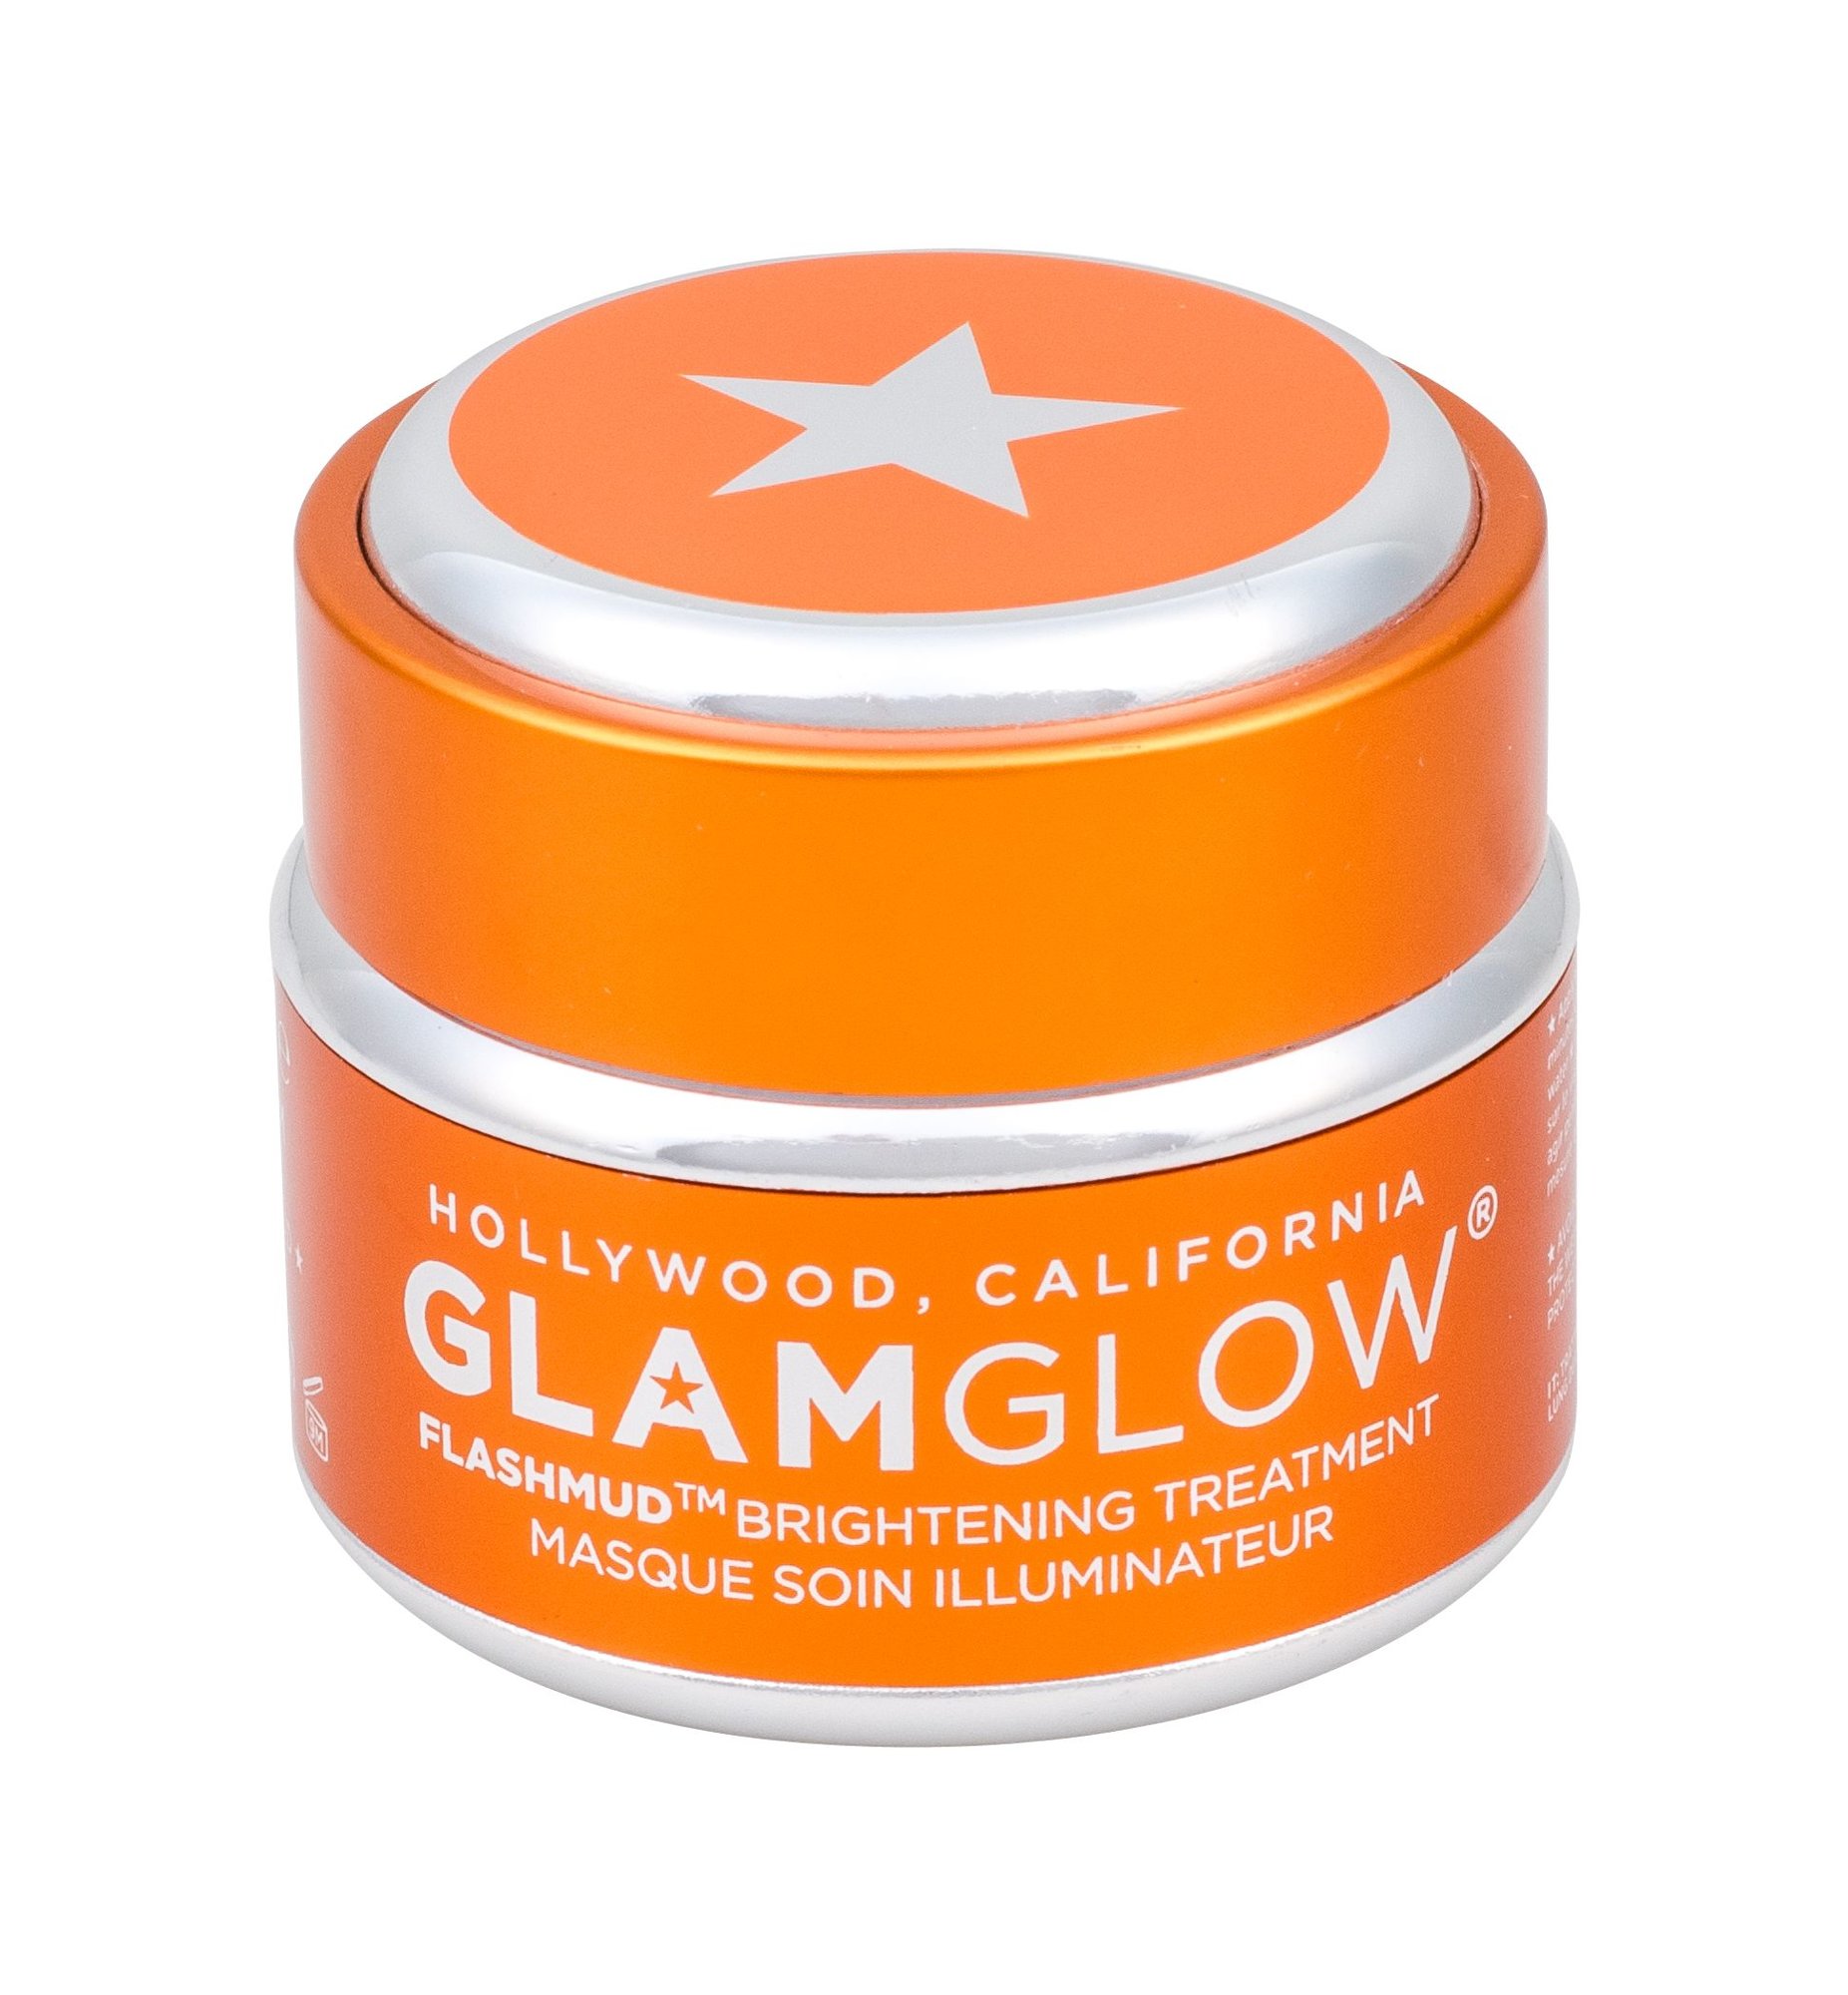 Glam Glow Flashmud Brightening Treatment